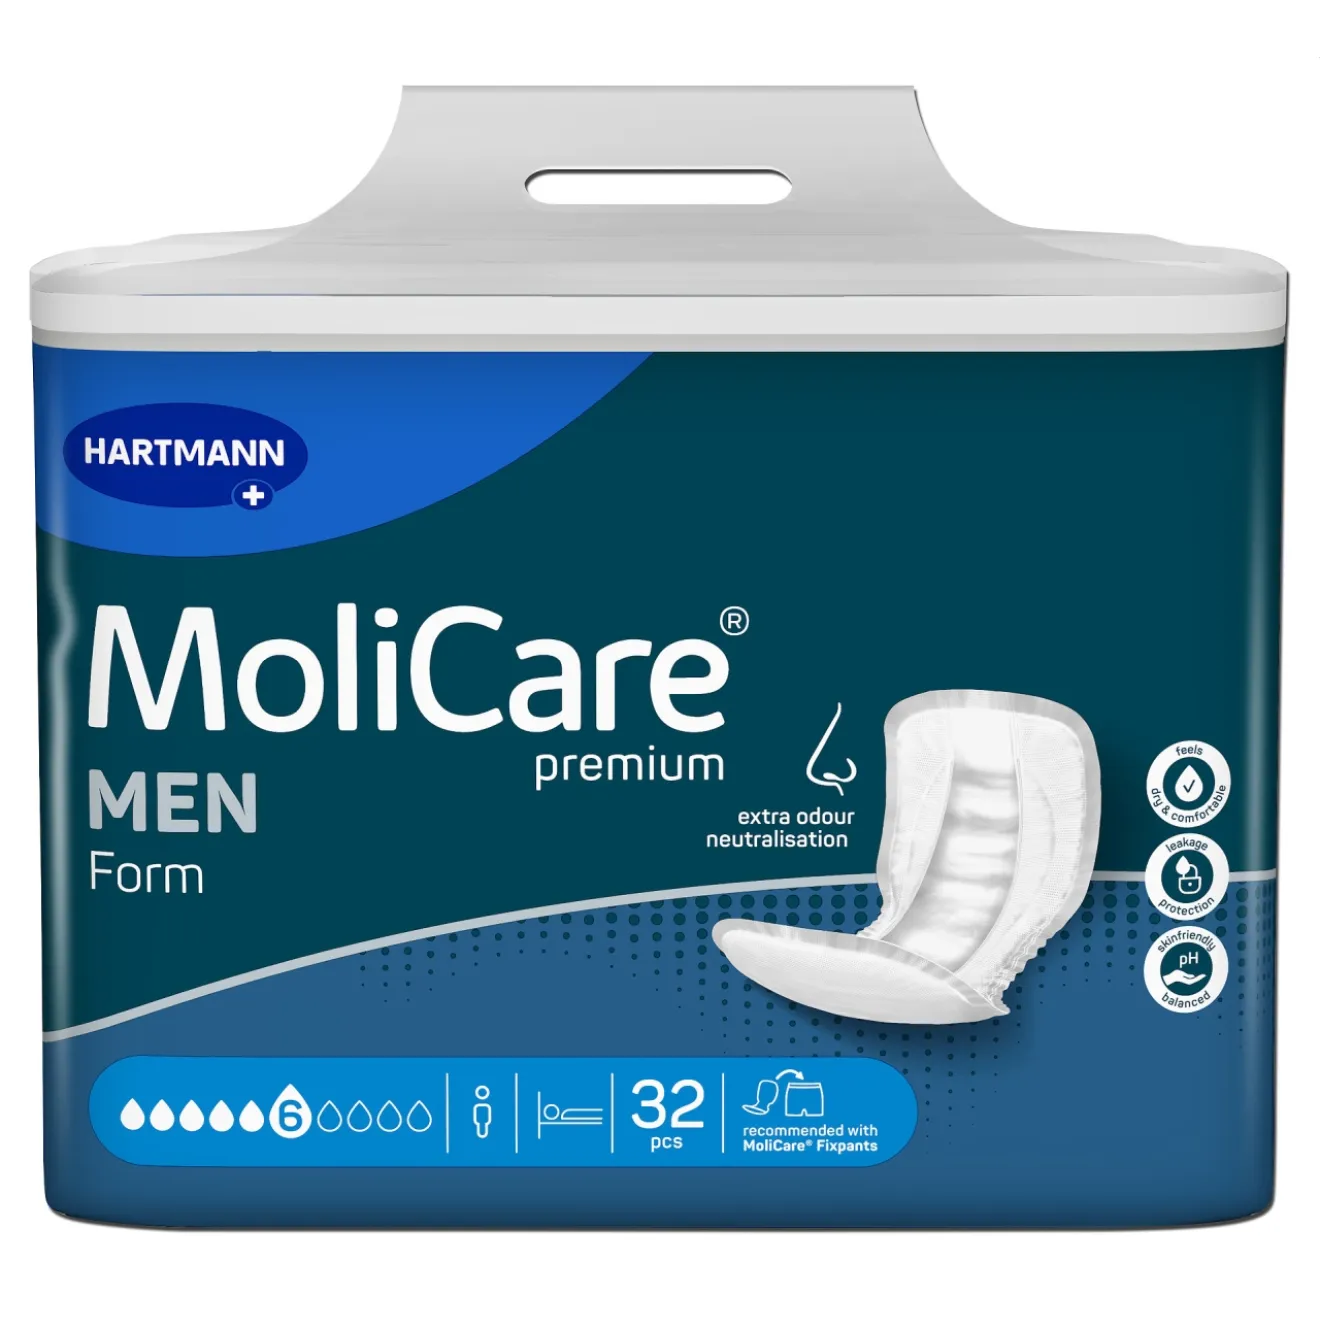 MOLICARE Premium Form MEN 6 Tropfen 4x32 ST